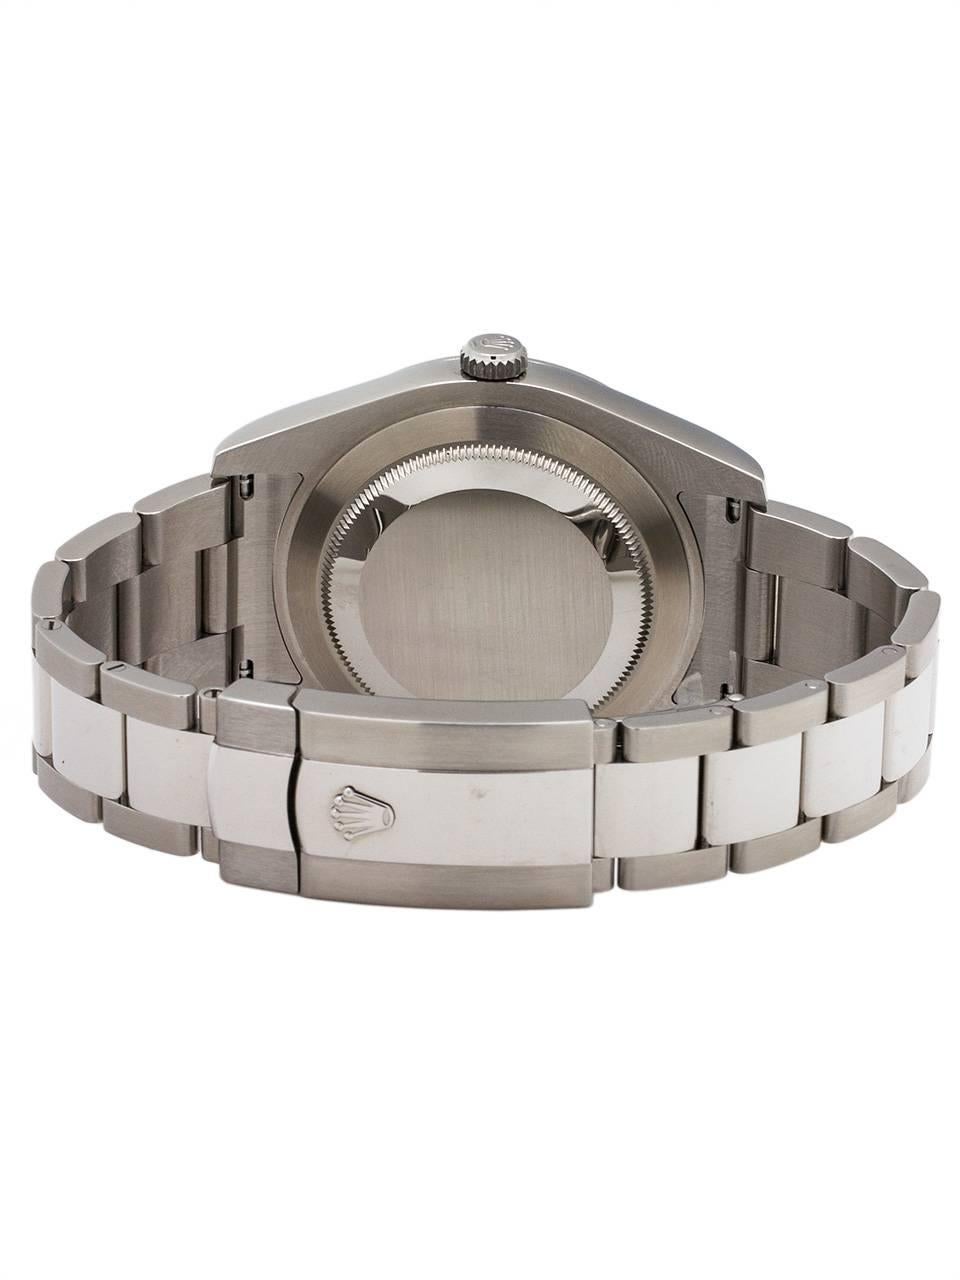 Modern Rolex stainless steel Blue Dial Datejust II self winding wristwatch c2016